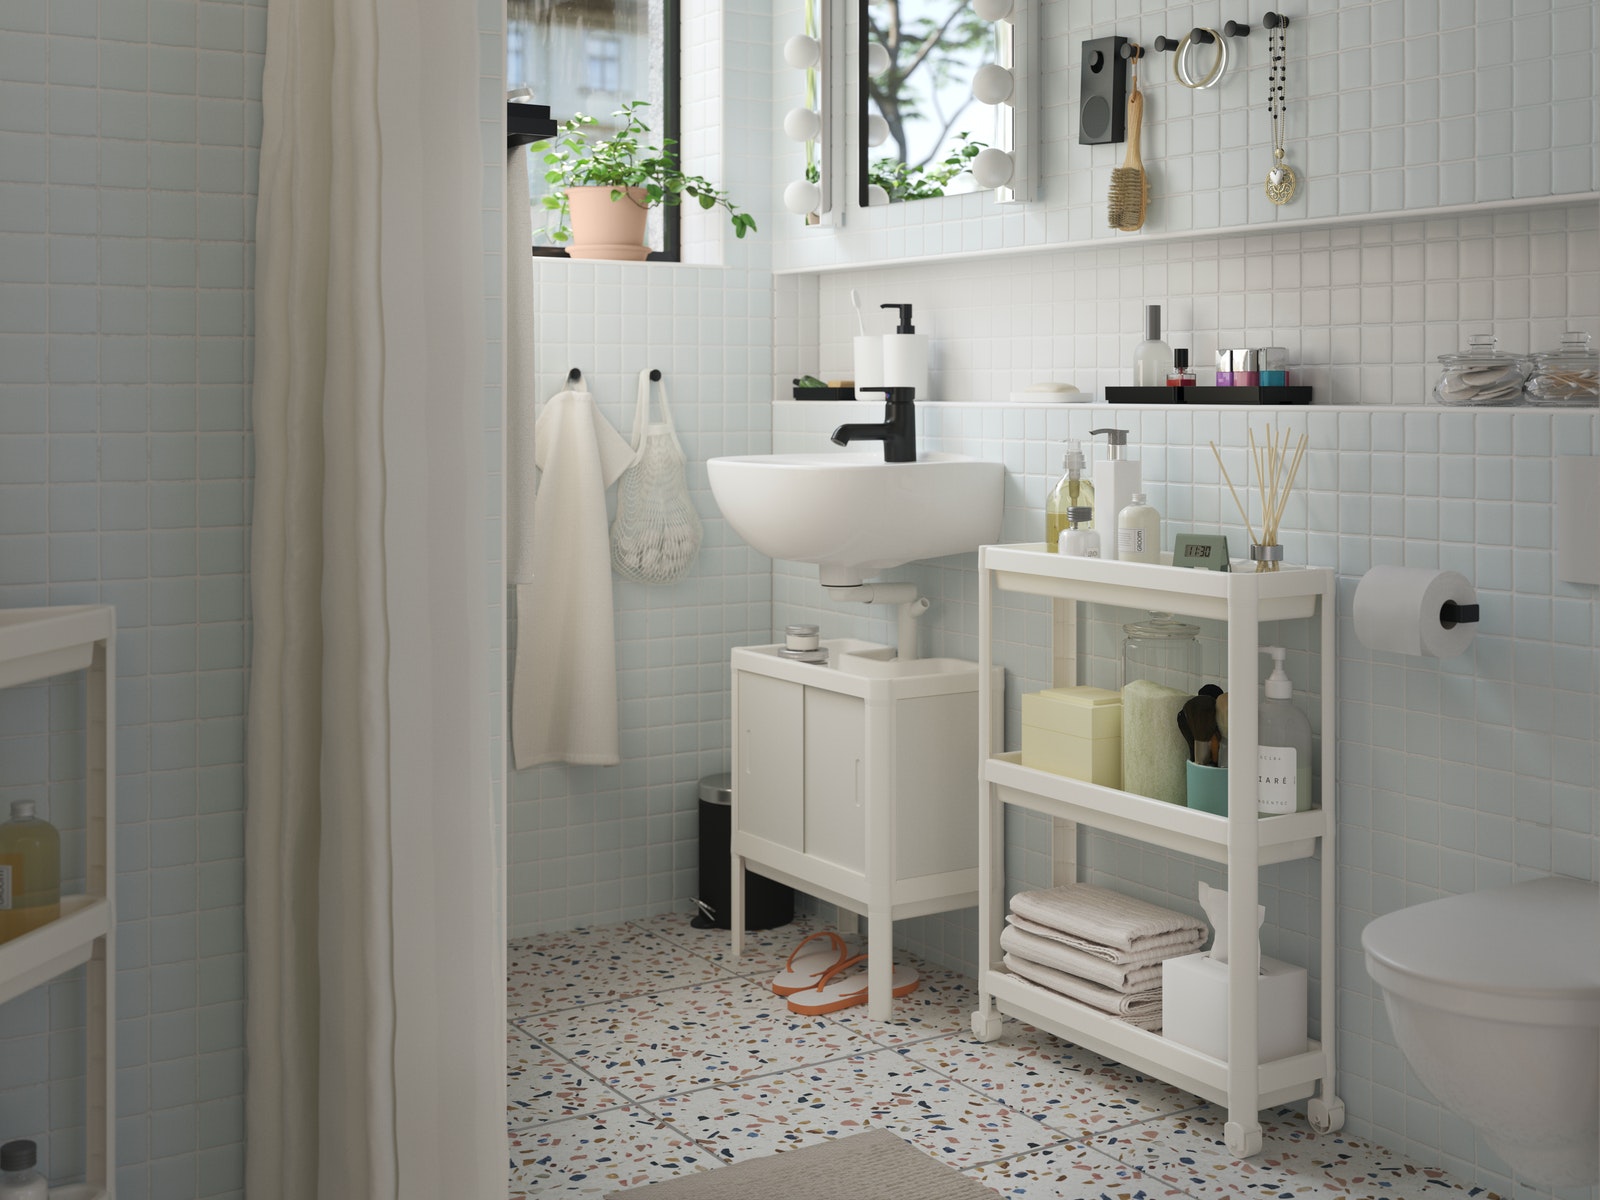 IKEA - A small bathroom that’s big on storage